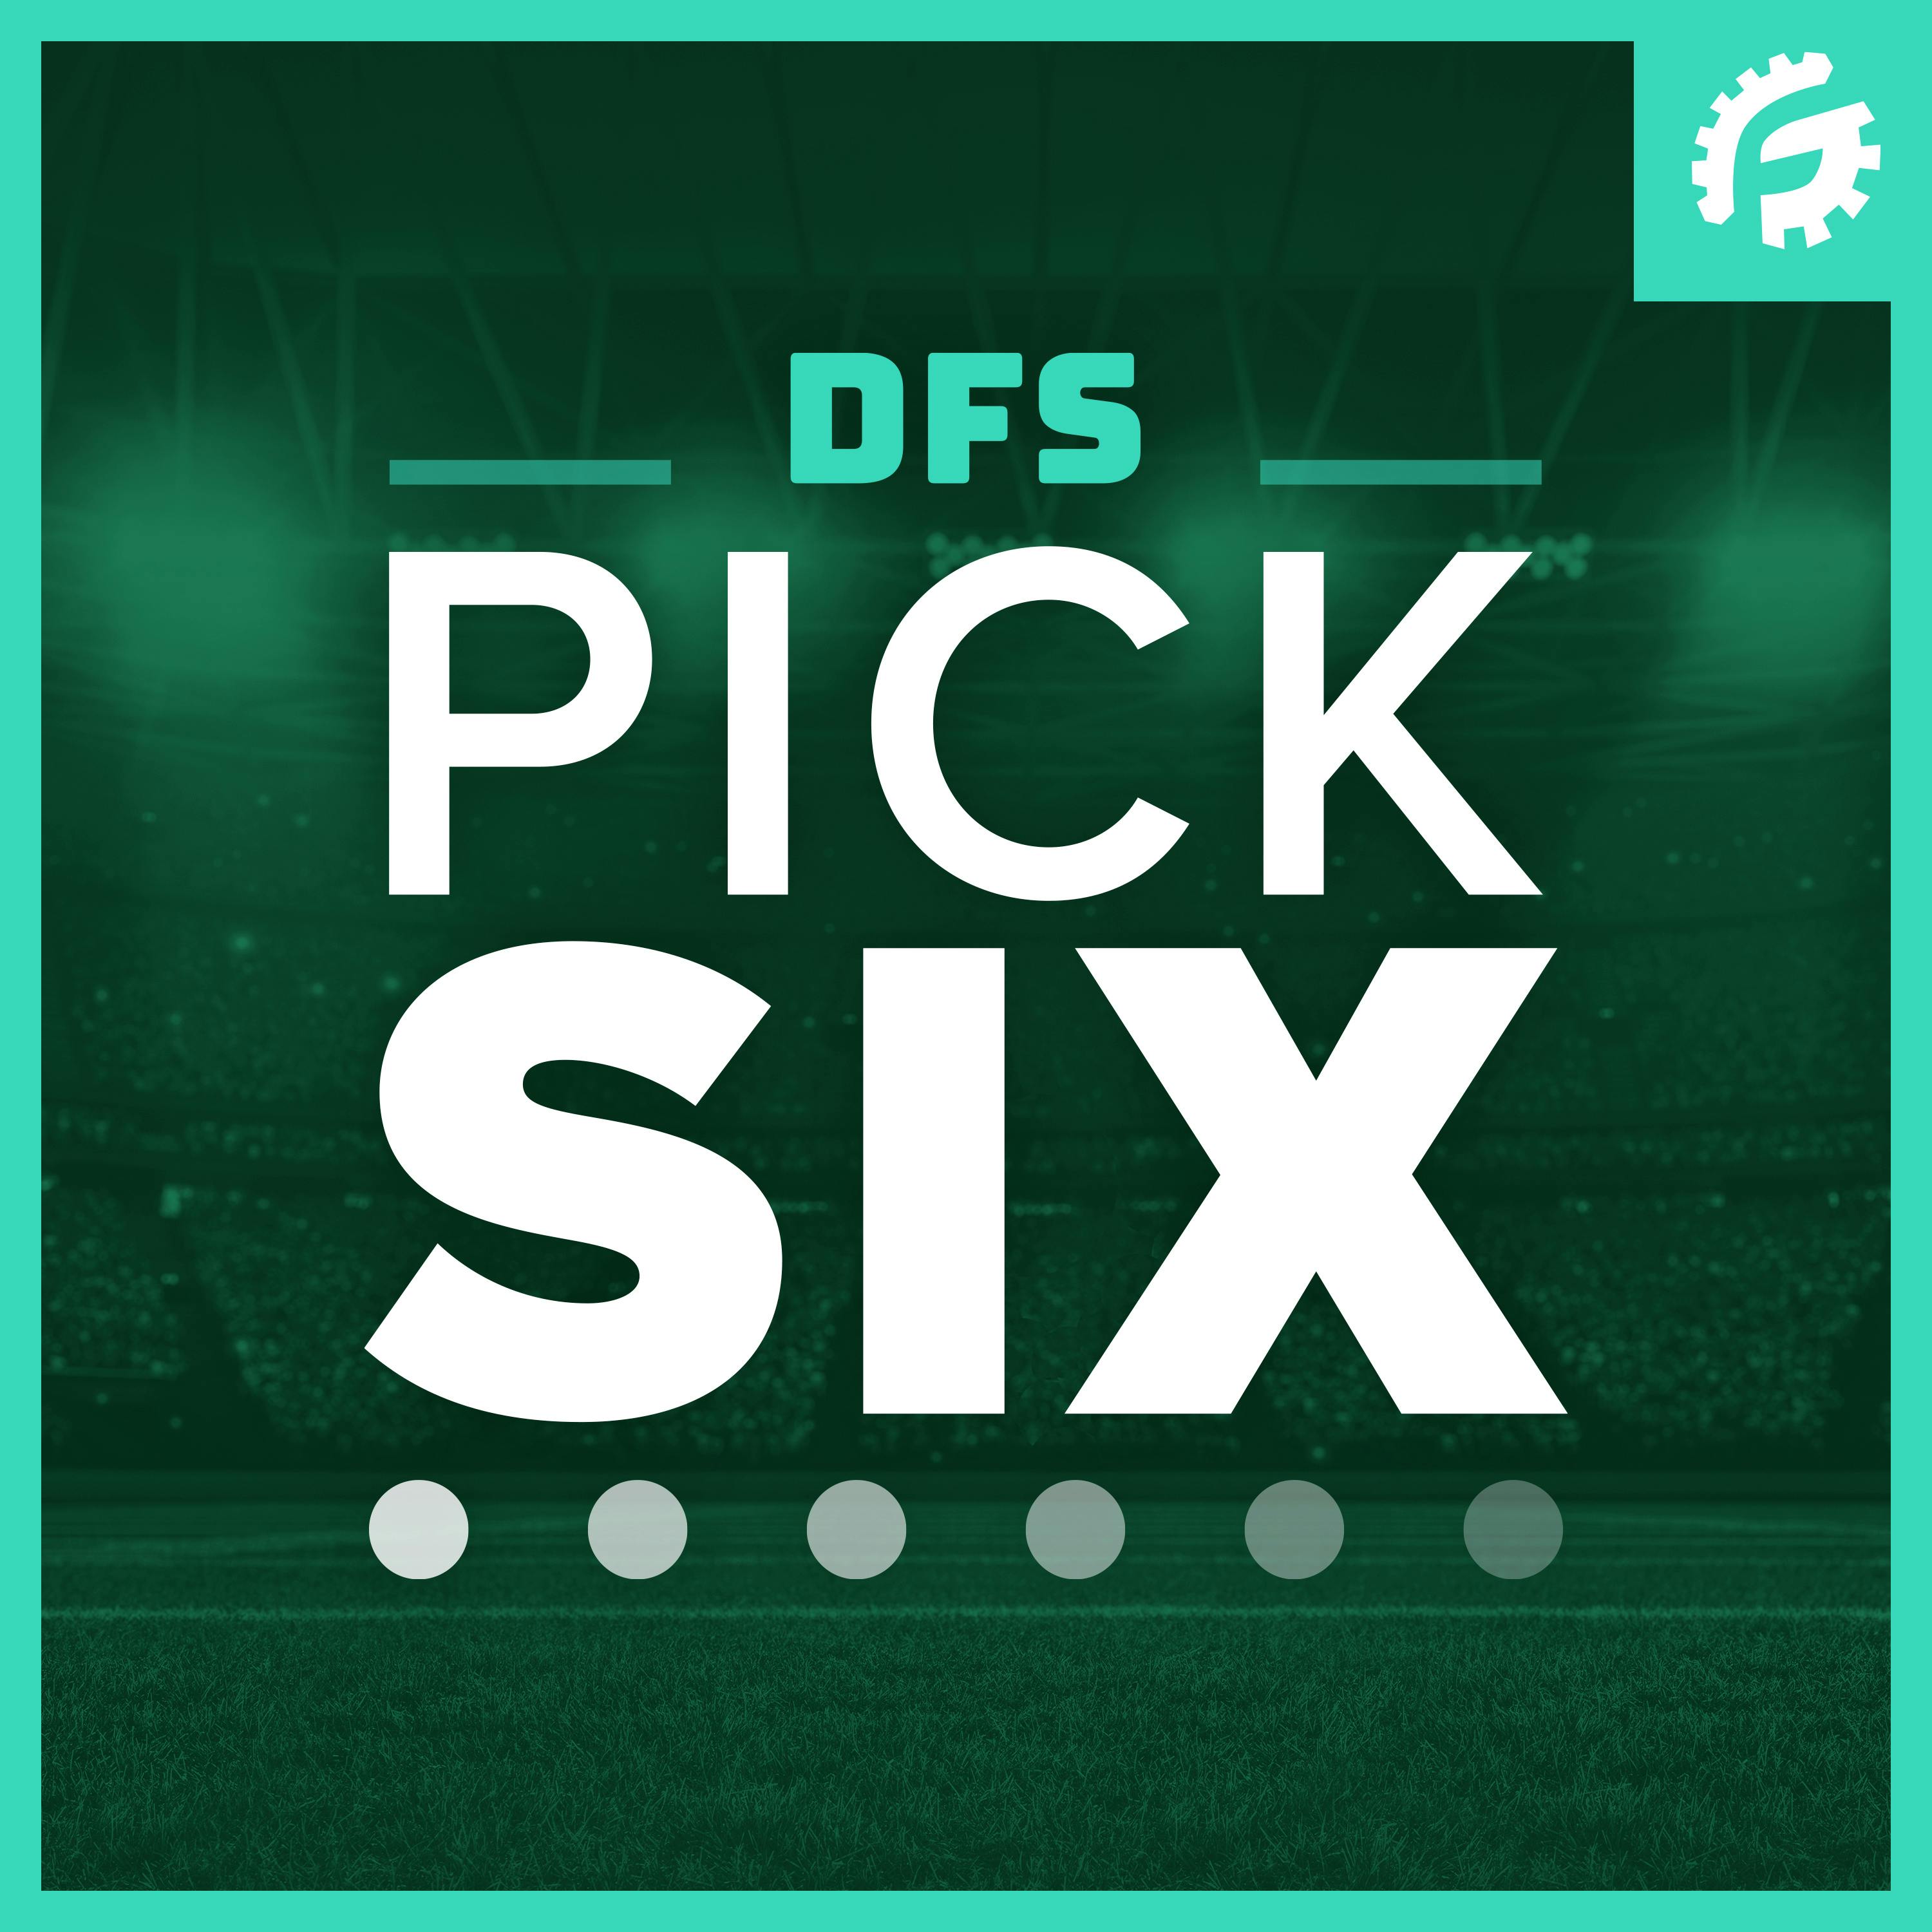 NFL DFS Pick 6 Show - Week 7